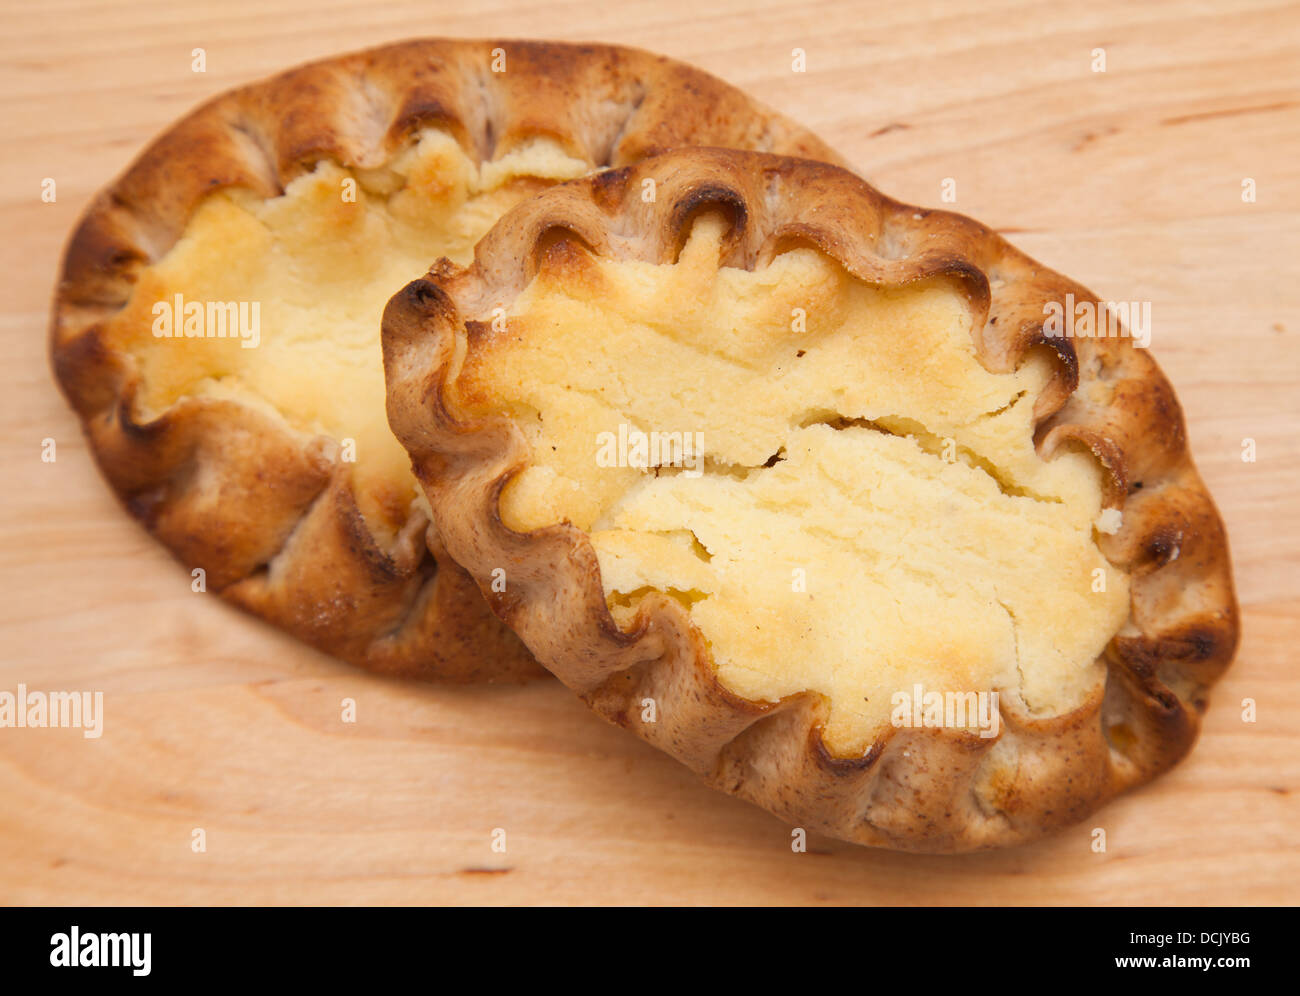 Karelian pasty, rye crust open pastry Stock Photo